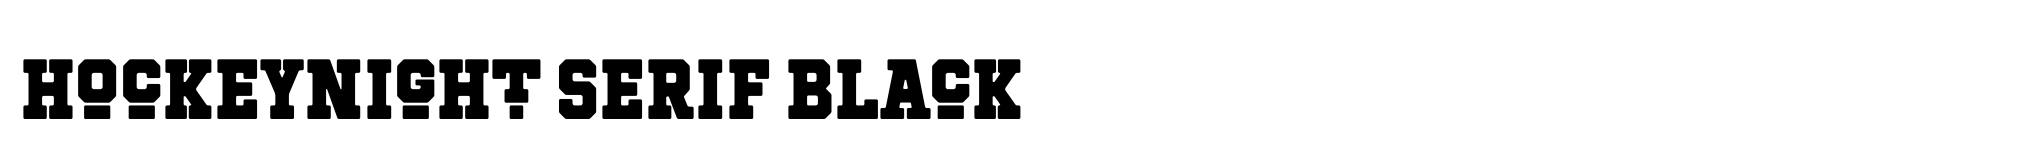 Hockeynight Serif Black image